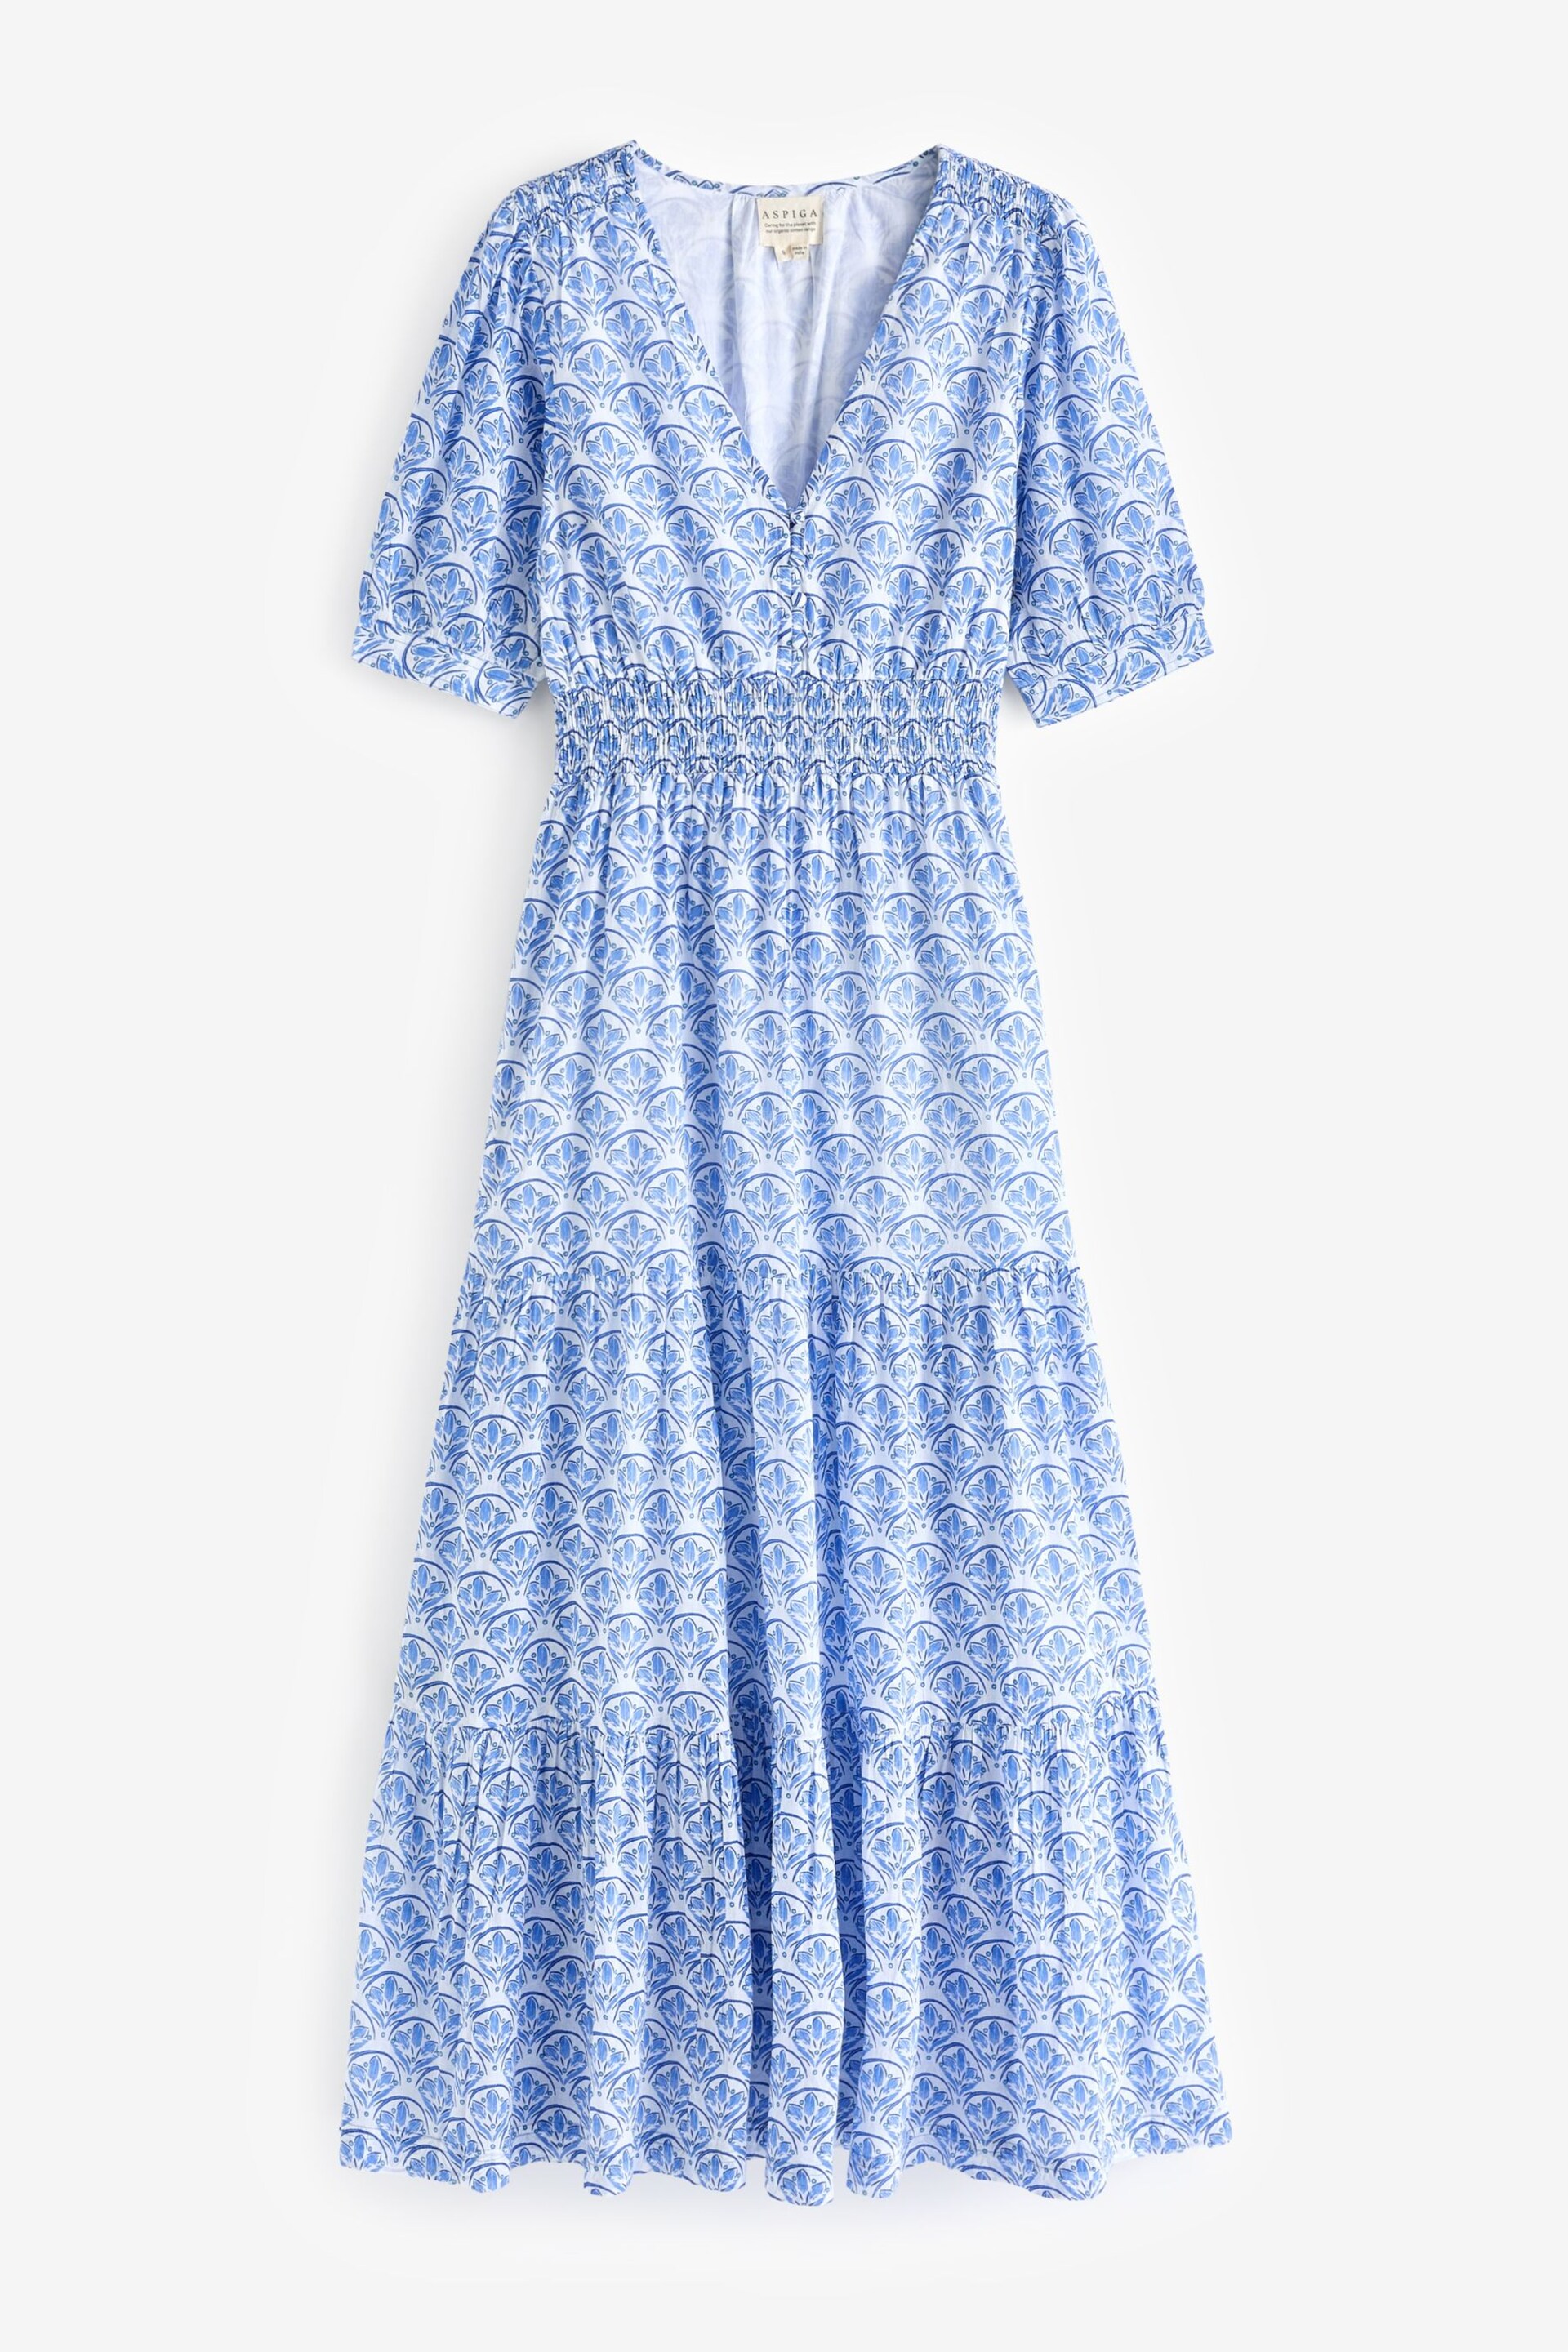 Aspiga Blue Billie Short Sleeve Dress - Image 6 of 6